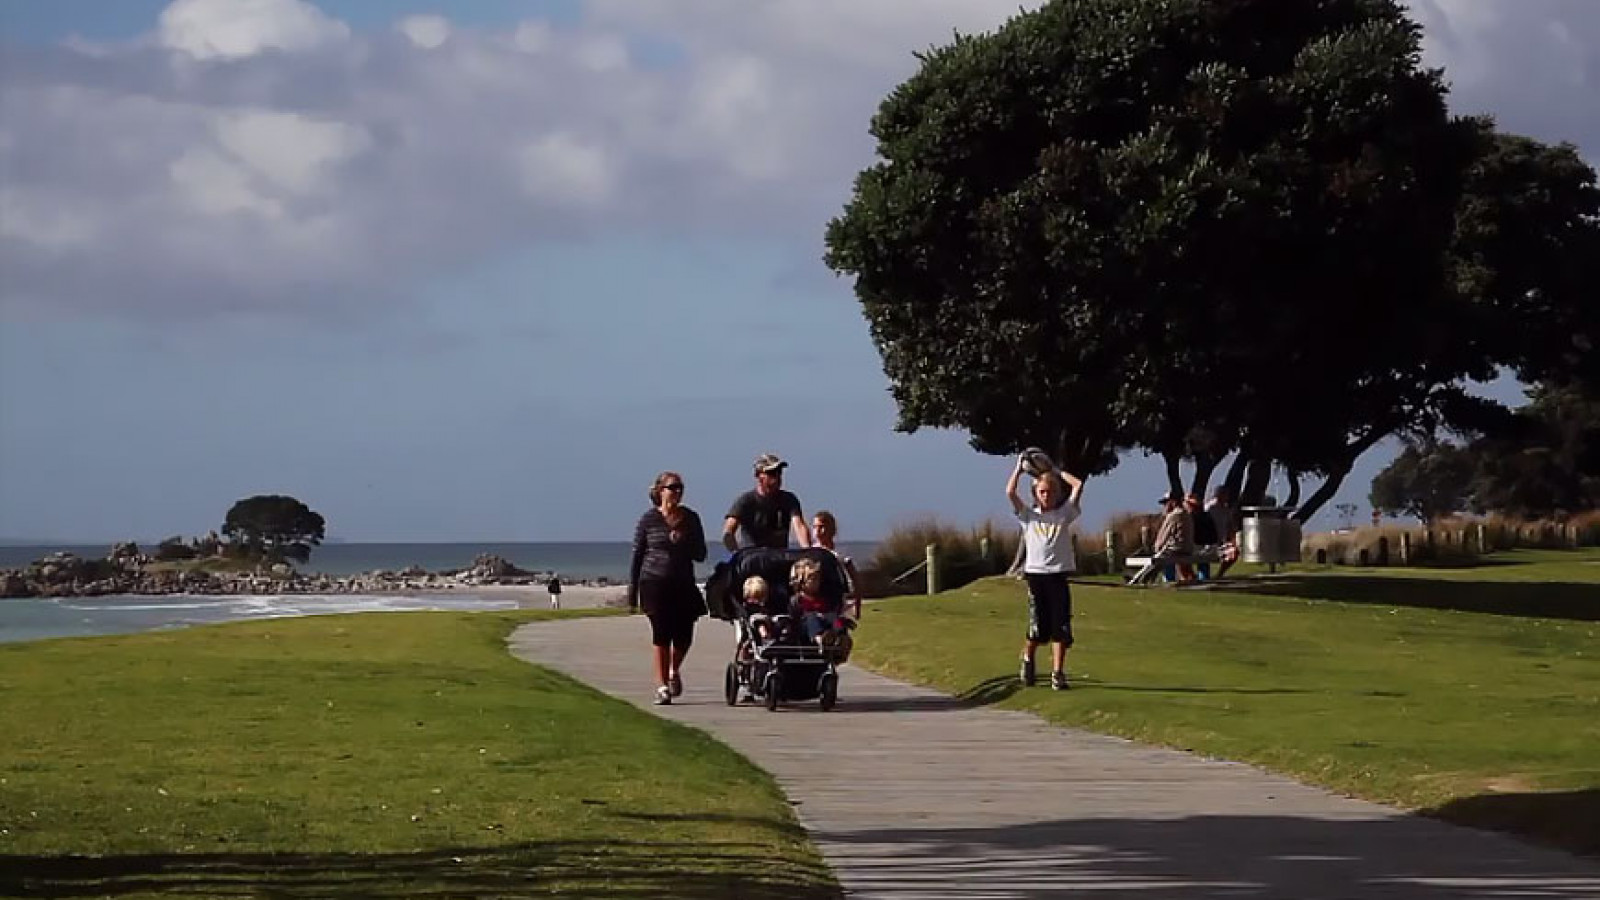 Family strolling in park